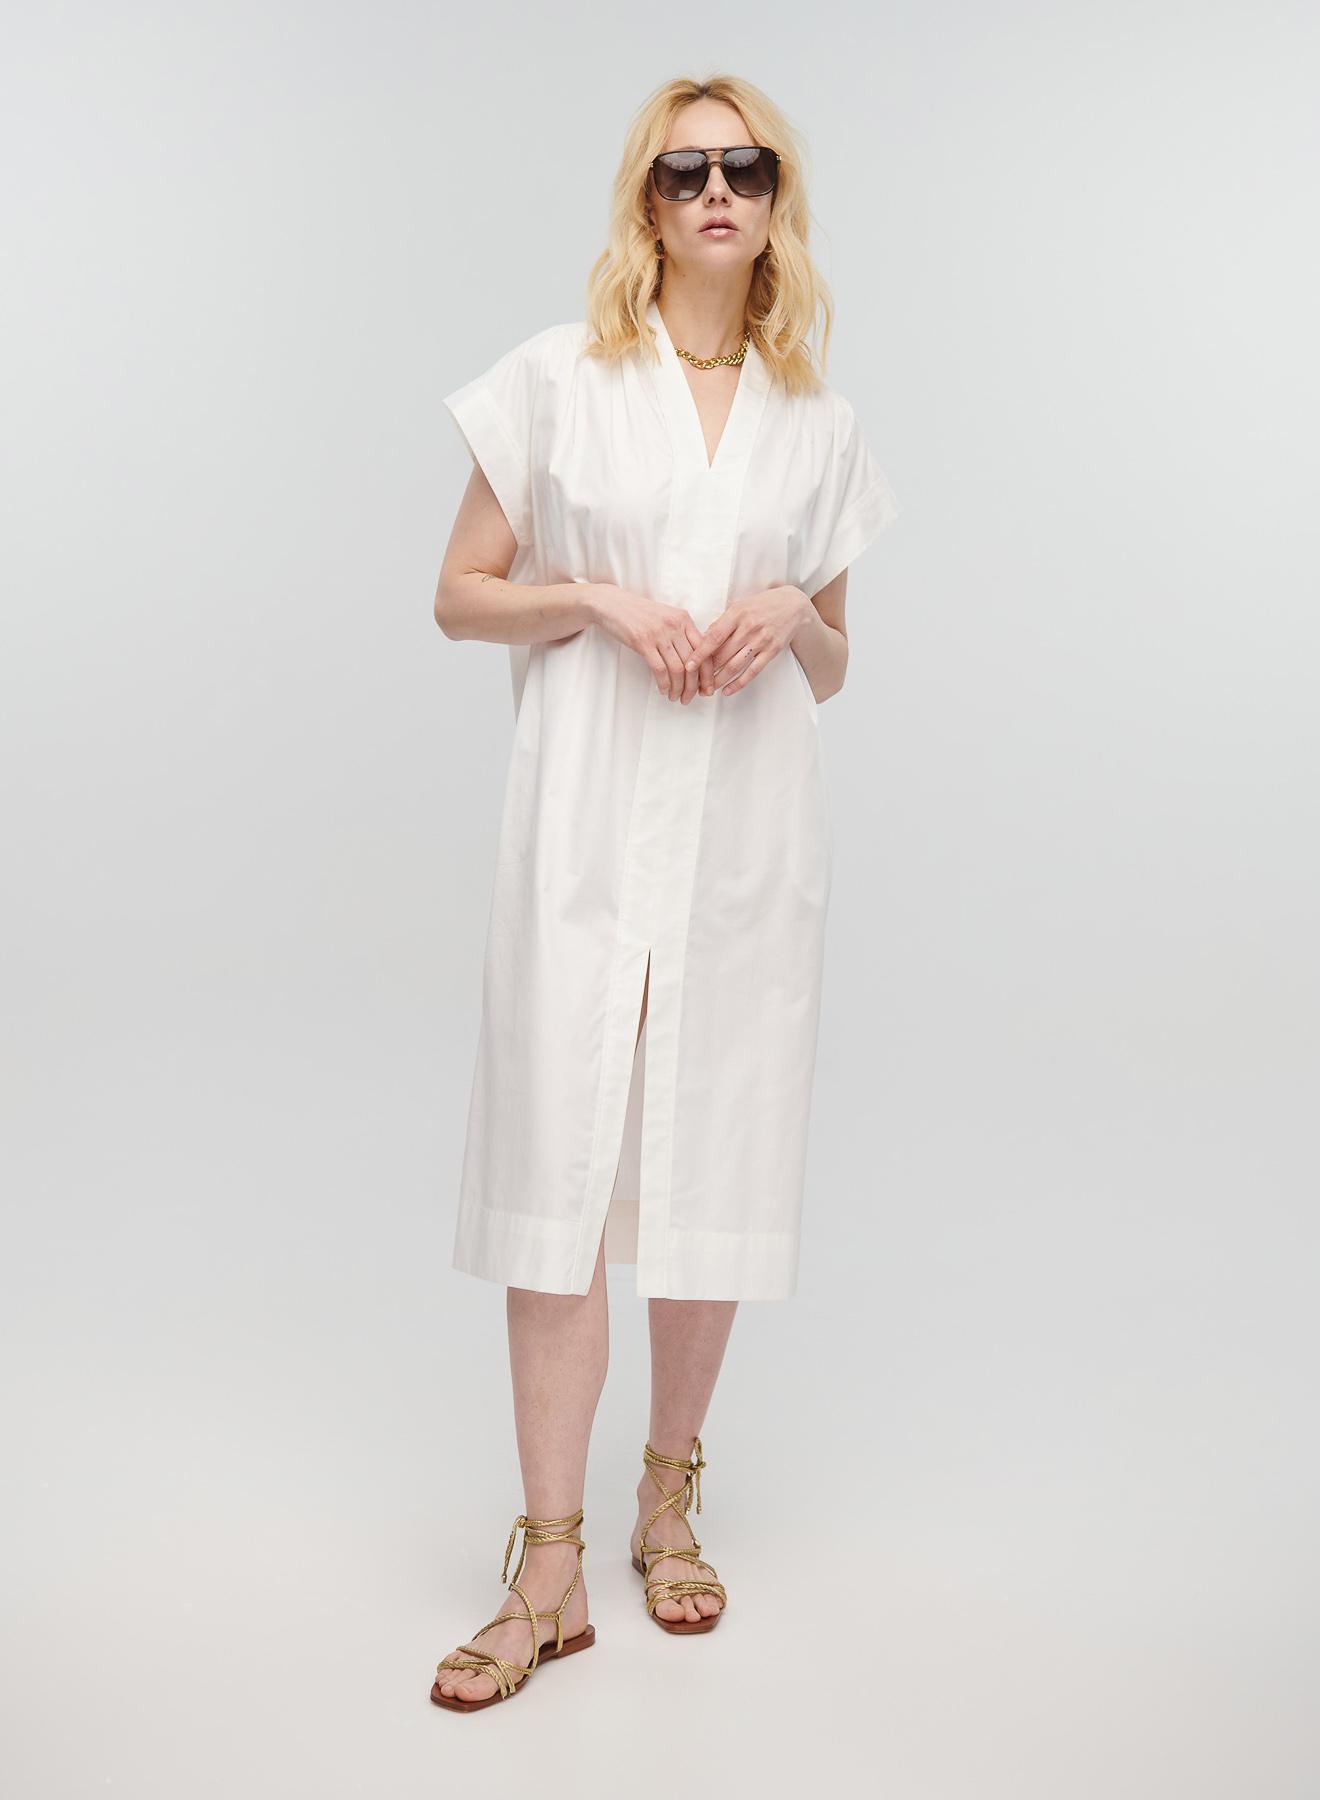 White long sleeveless Dress with V neckline, belt and front slit Milla - 1